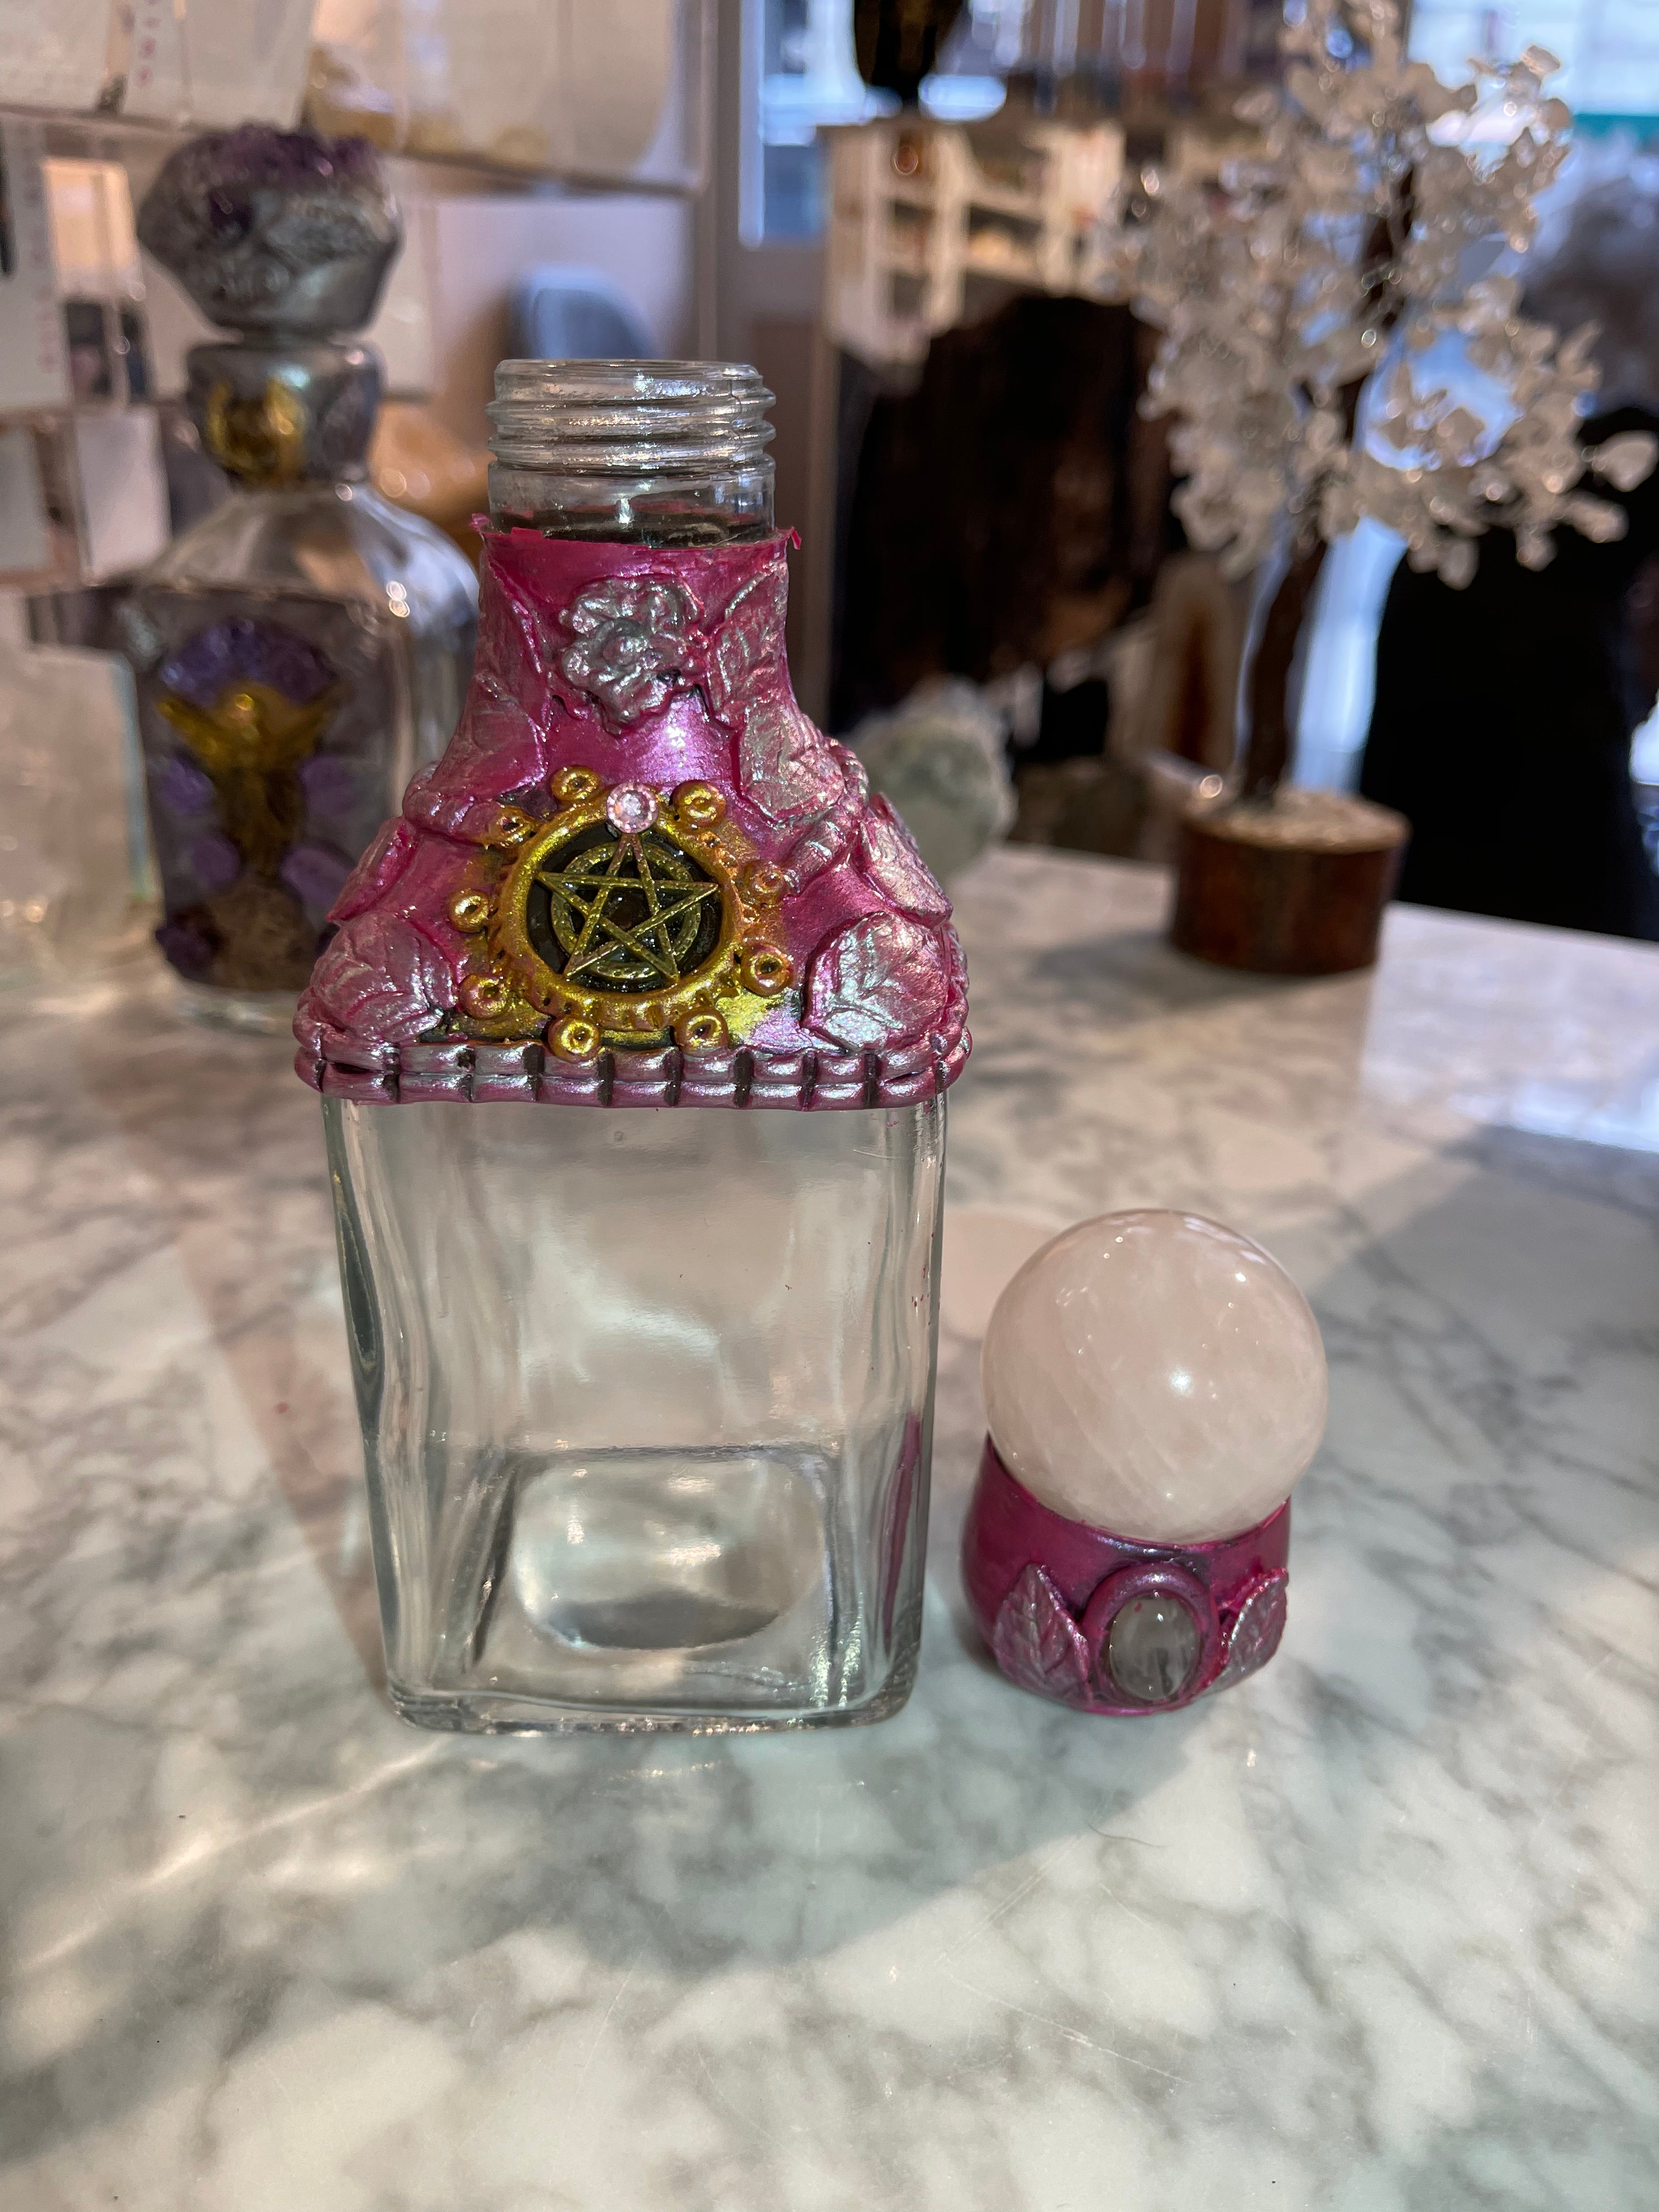 Magical Moon Water Spell Jar - Rose Quartz